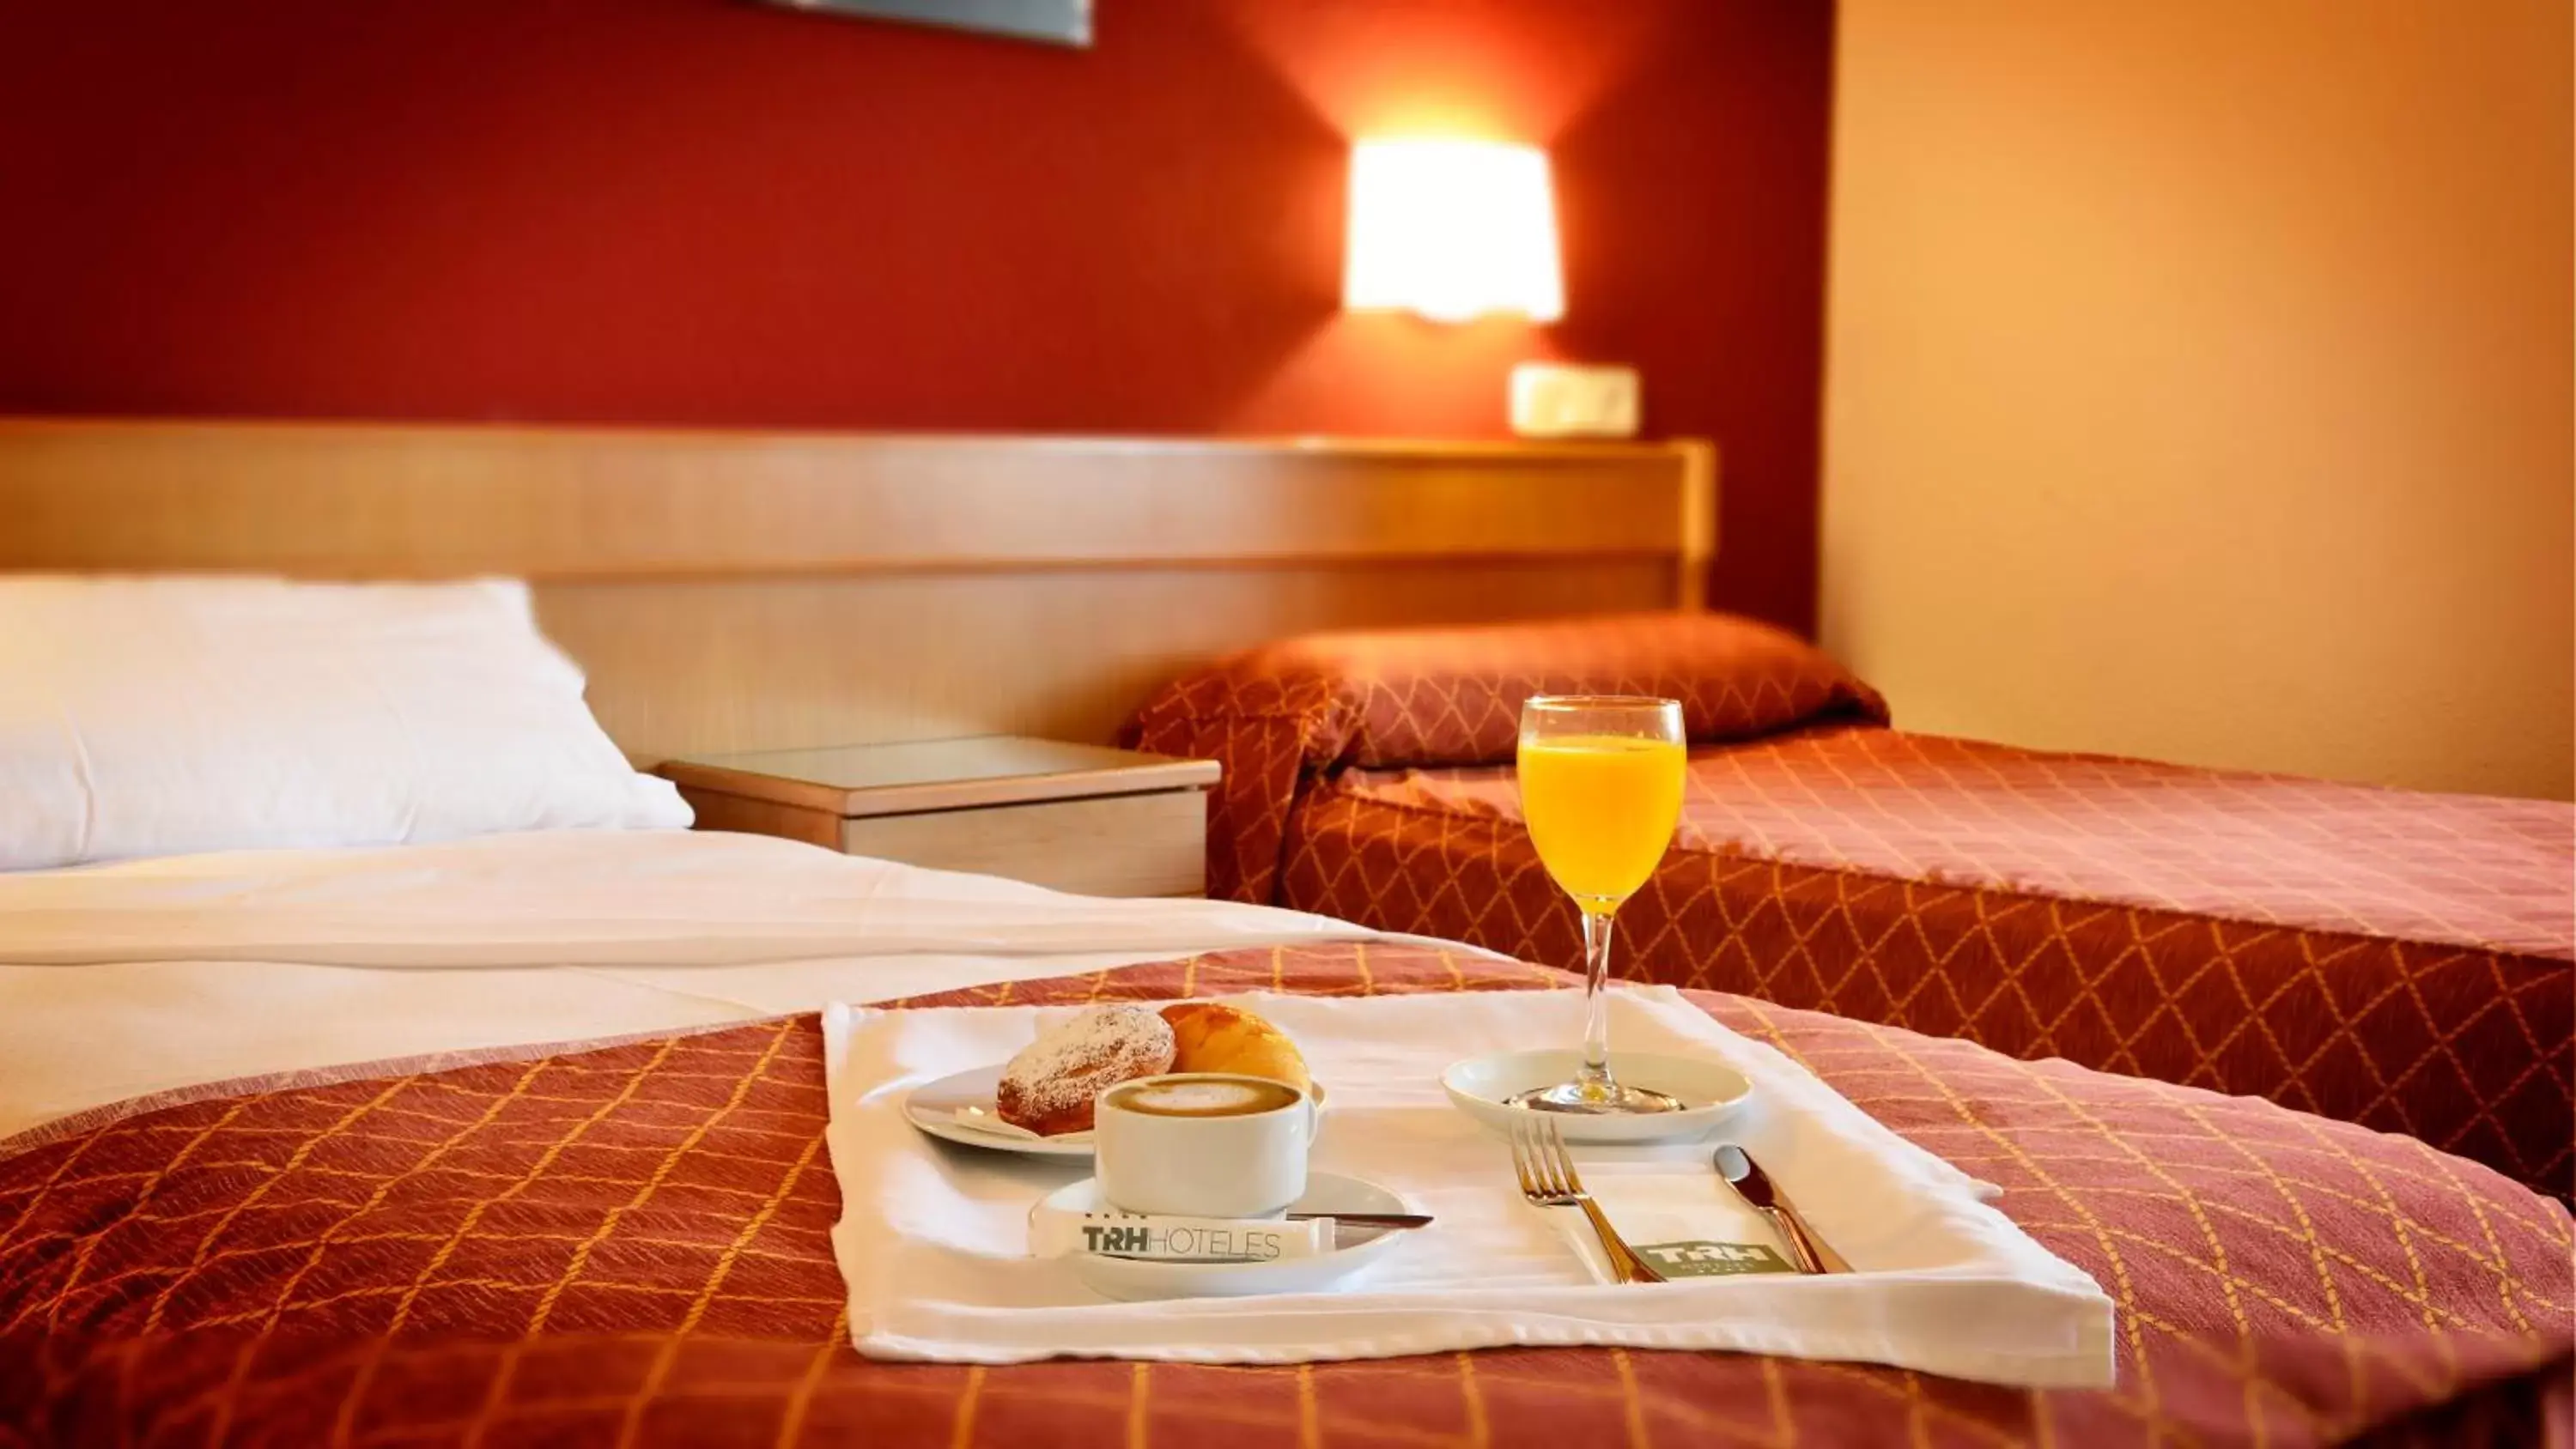 Food and drinks, Bed in Hotel TRH La Motilla